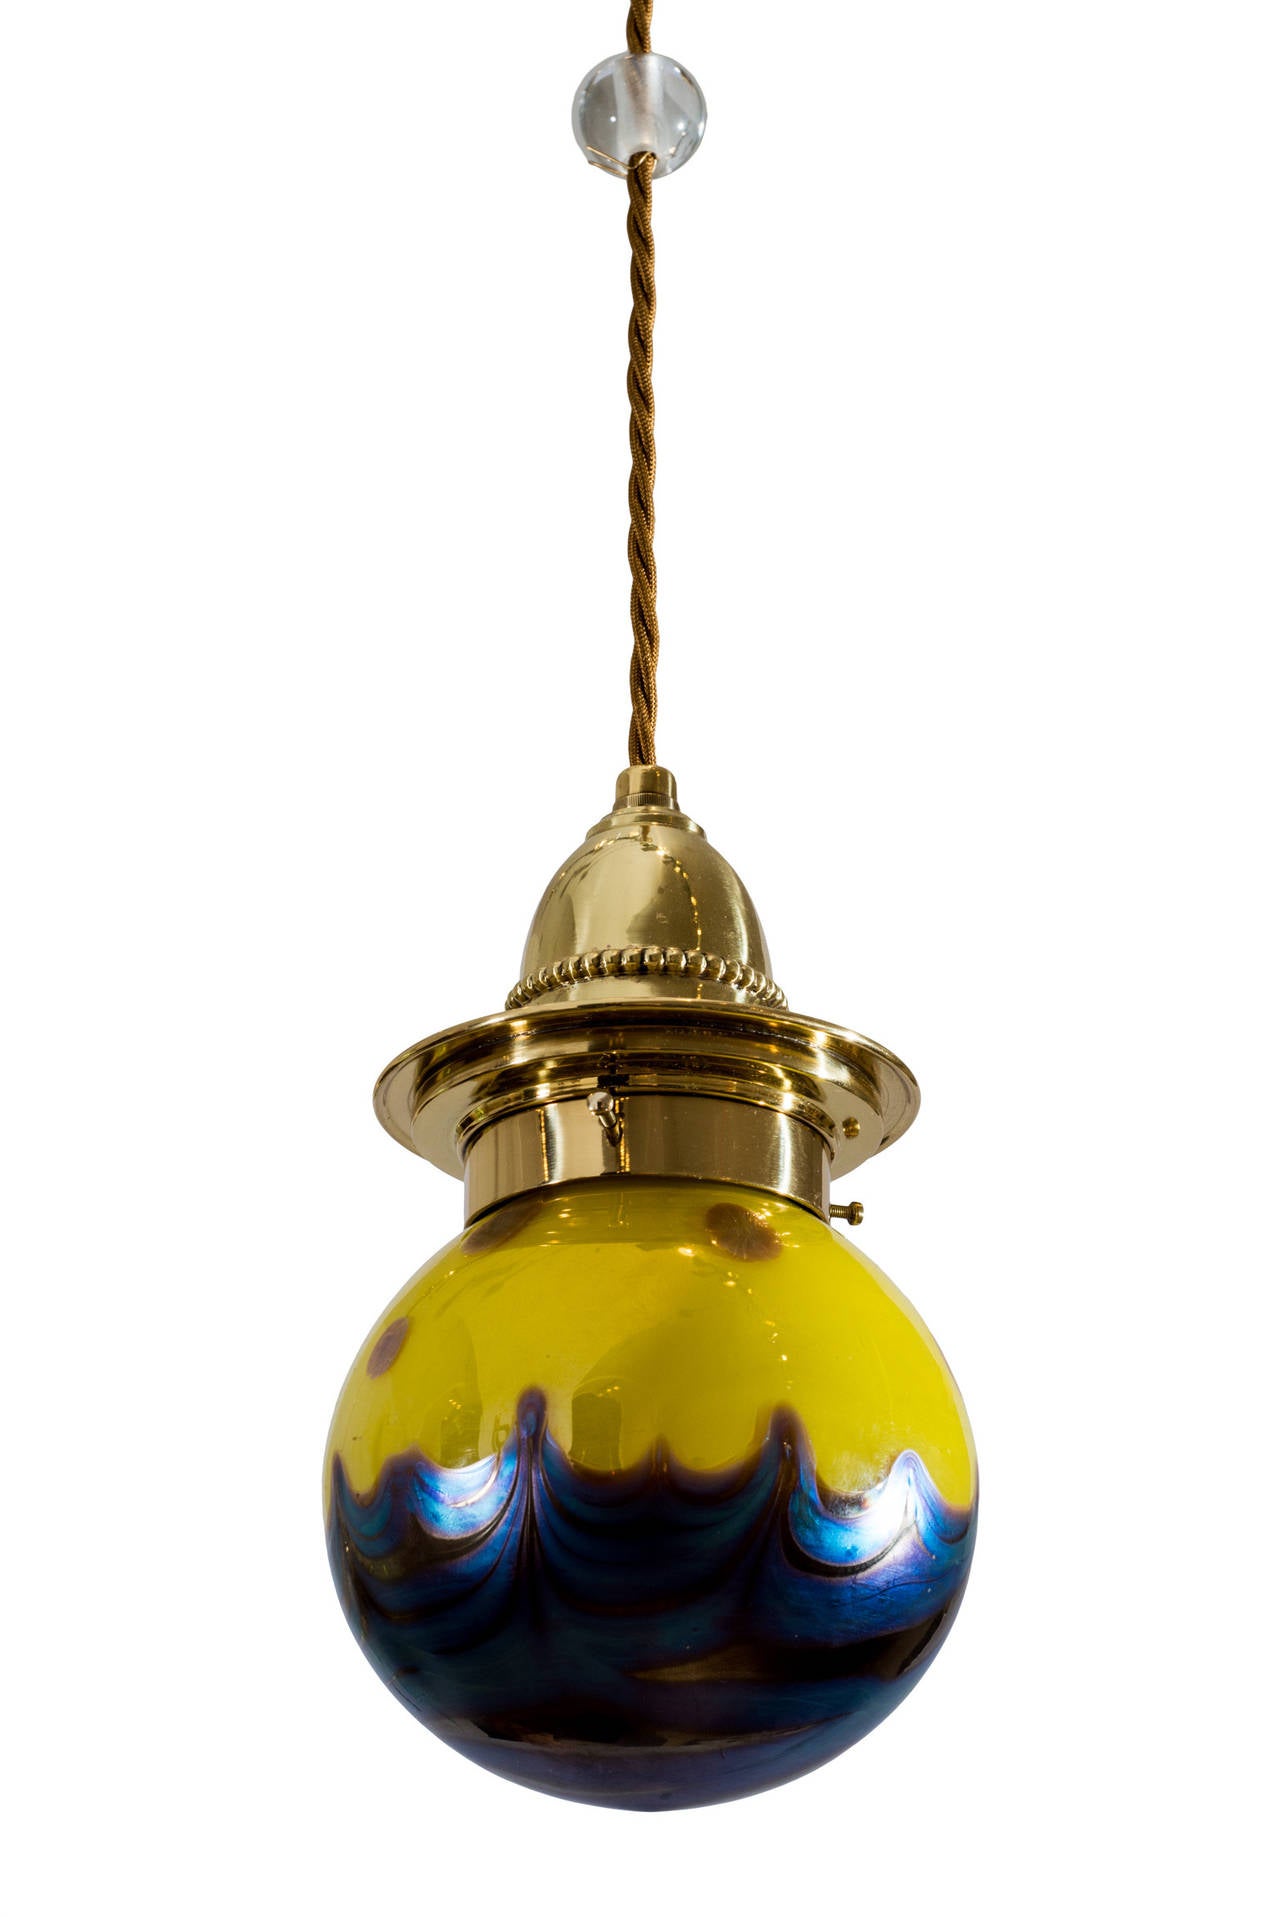 Austrian Viennese Hanging Lamp circa 1902 with Loetz Lamp Phenomen Gre 2/314 Shade For Sale